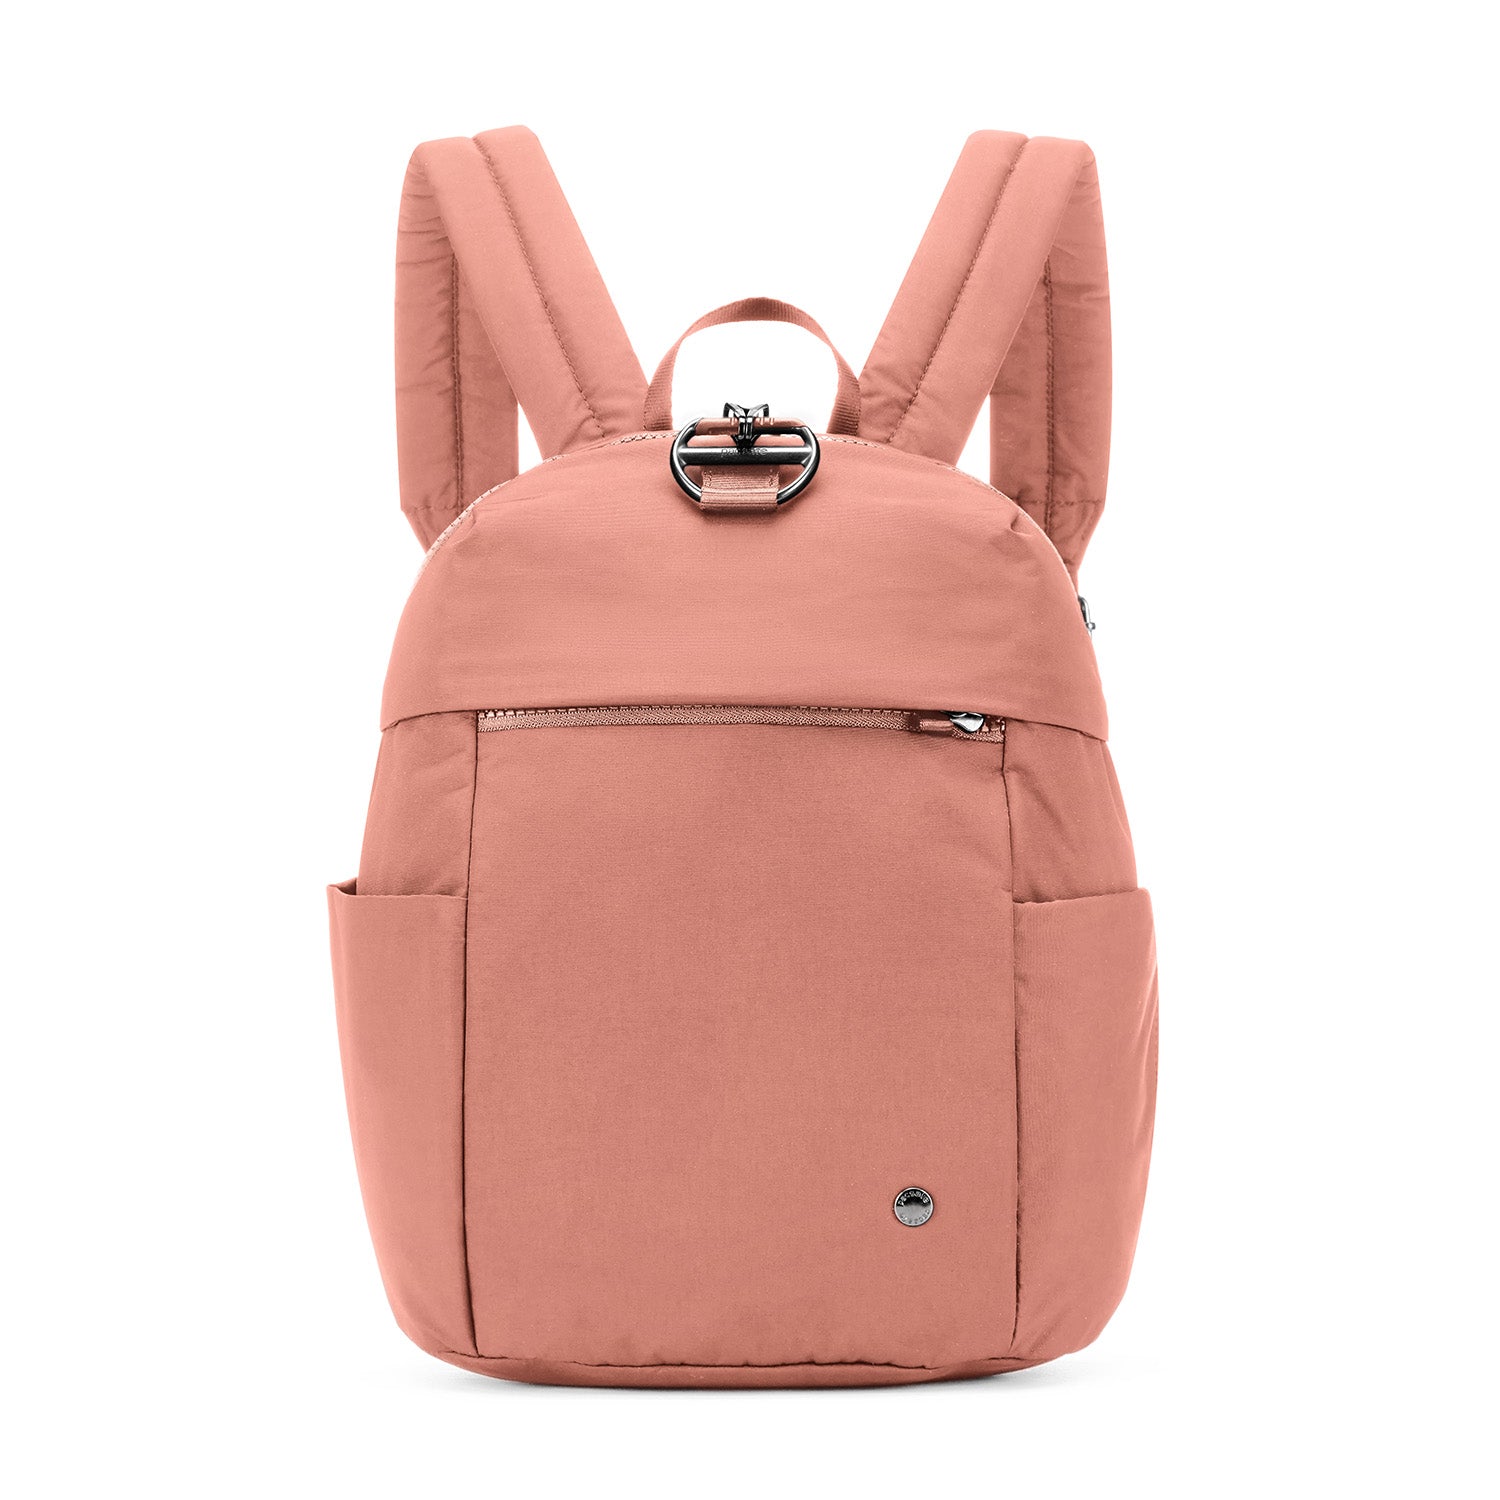 Pacsafe - CX Backpack Petite - Rose-1